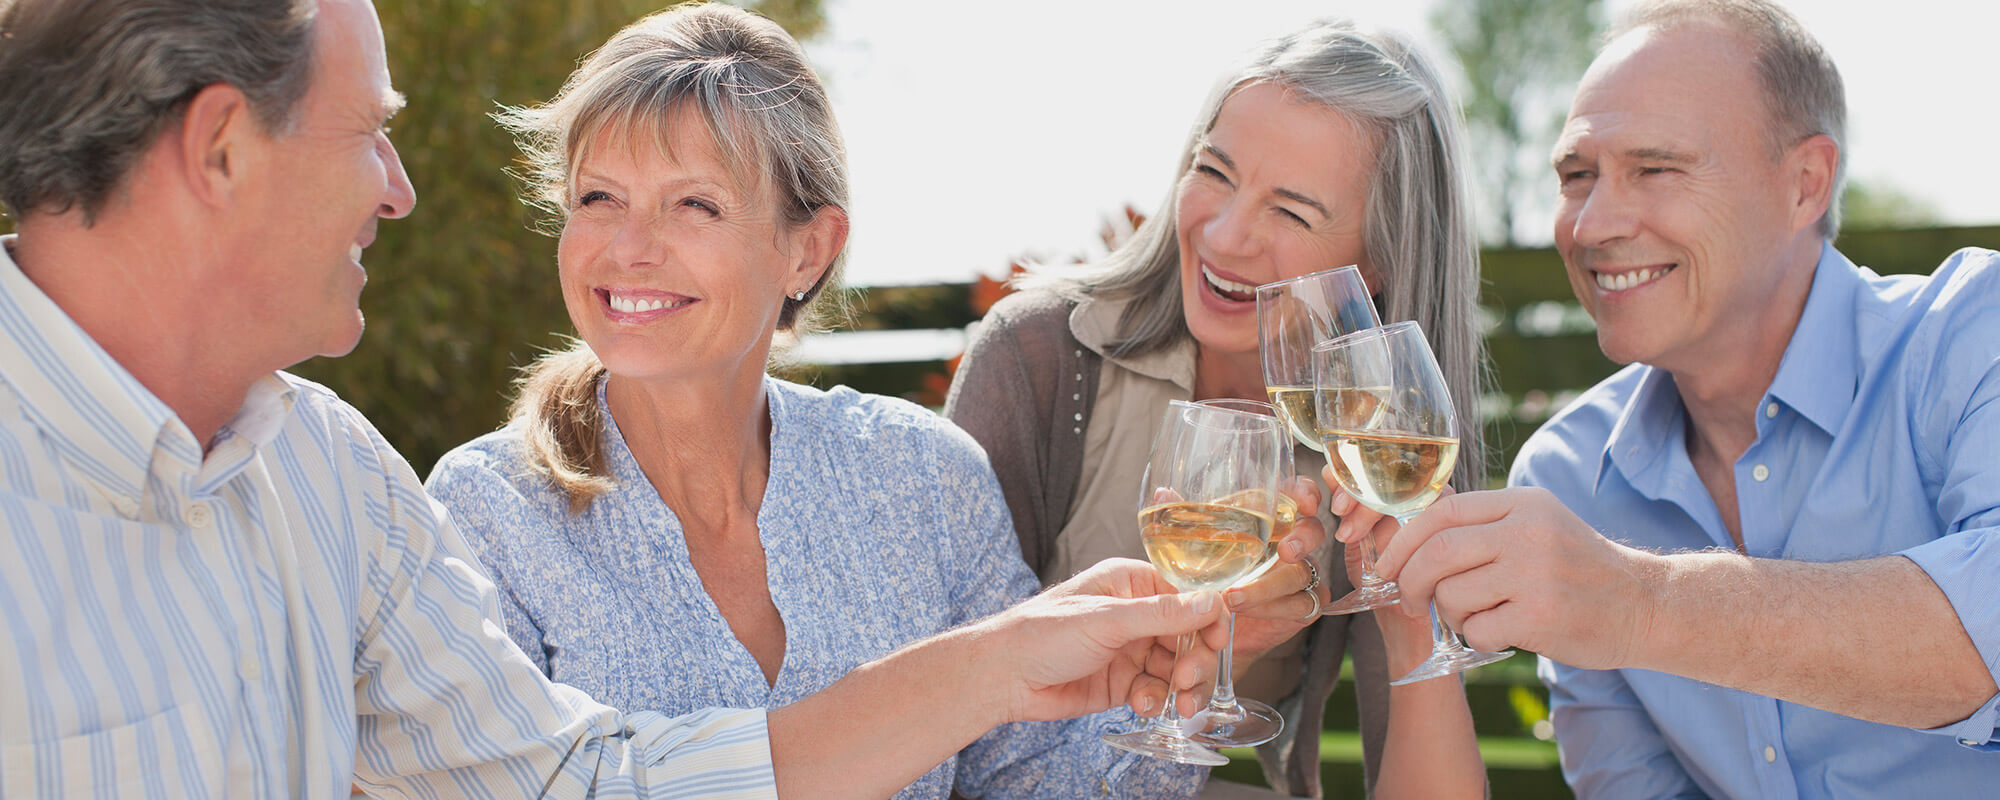 senior couples enjoying an active retirement through socialization